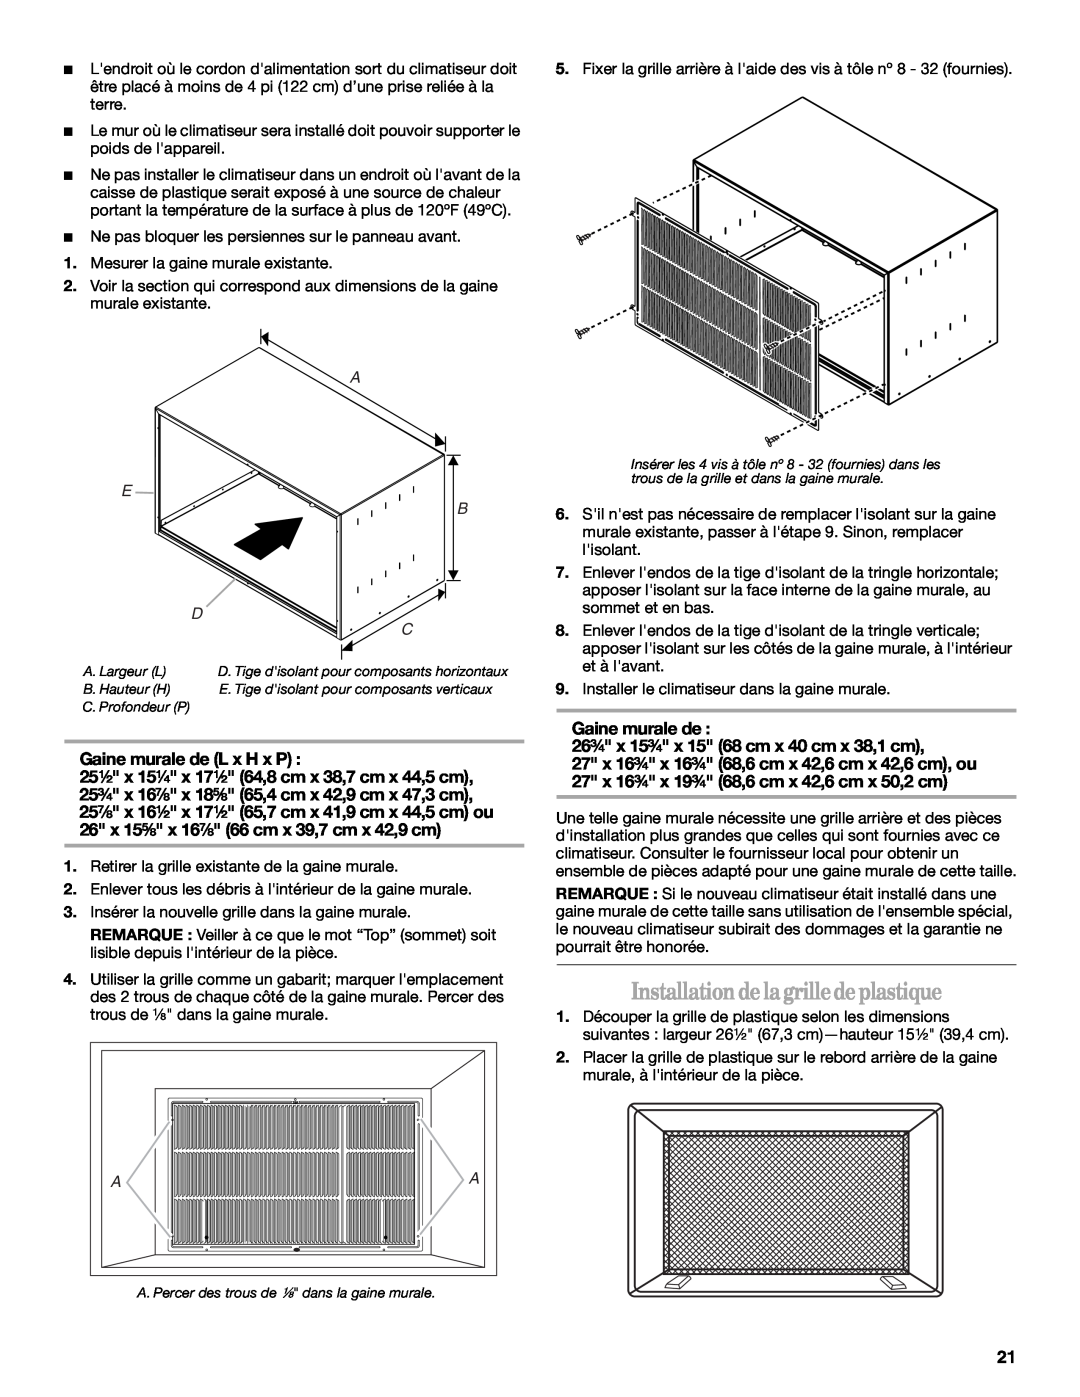 Whirlpool 819041994, 1188177 manual Installation delagrilledeplastique, Gaine murale de L x H x P, A E B 